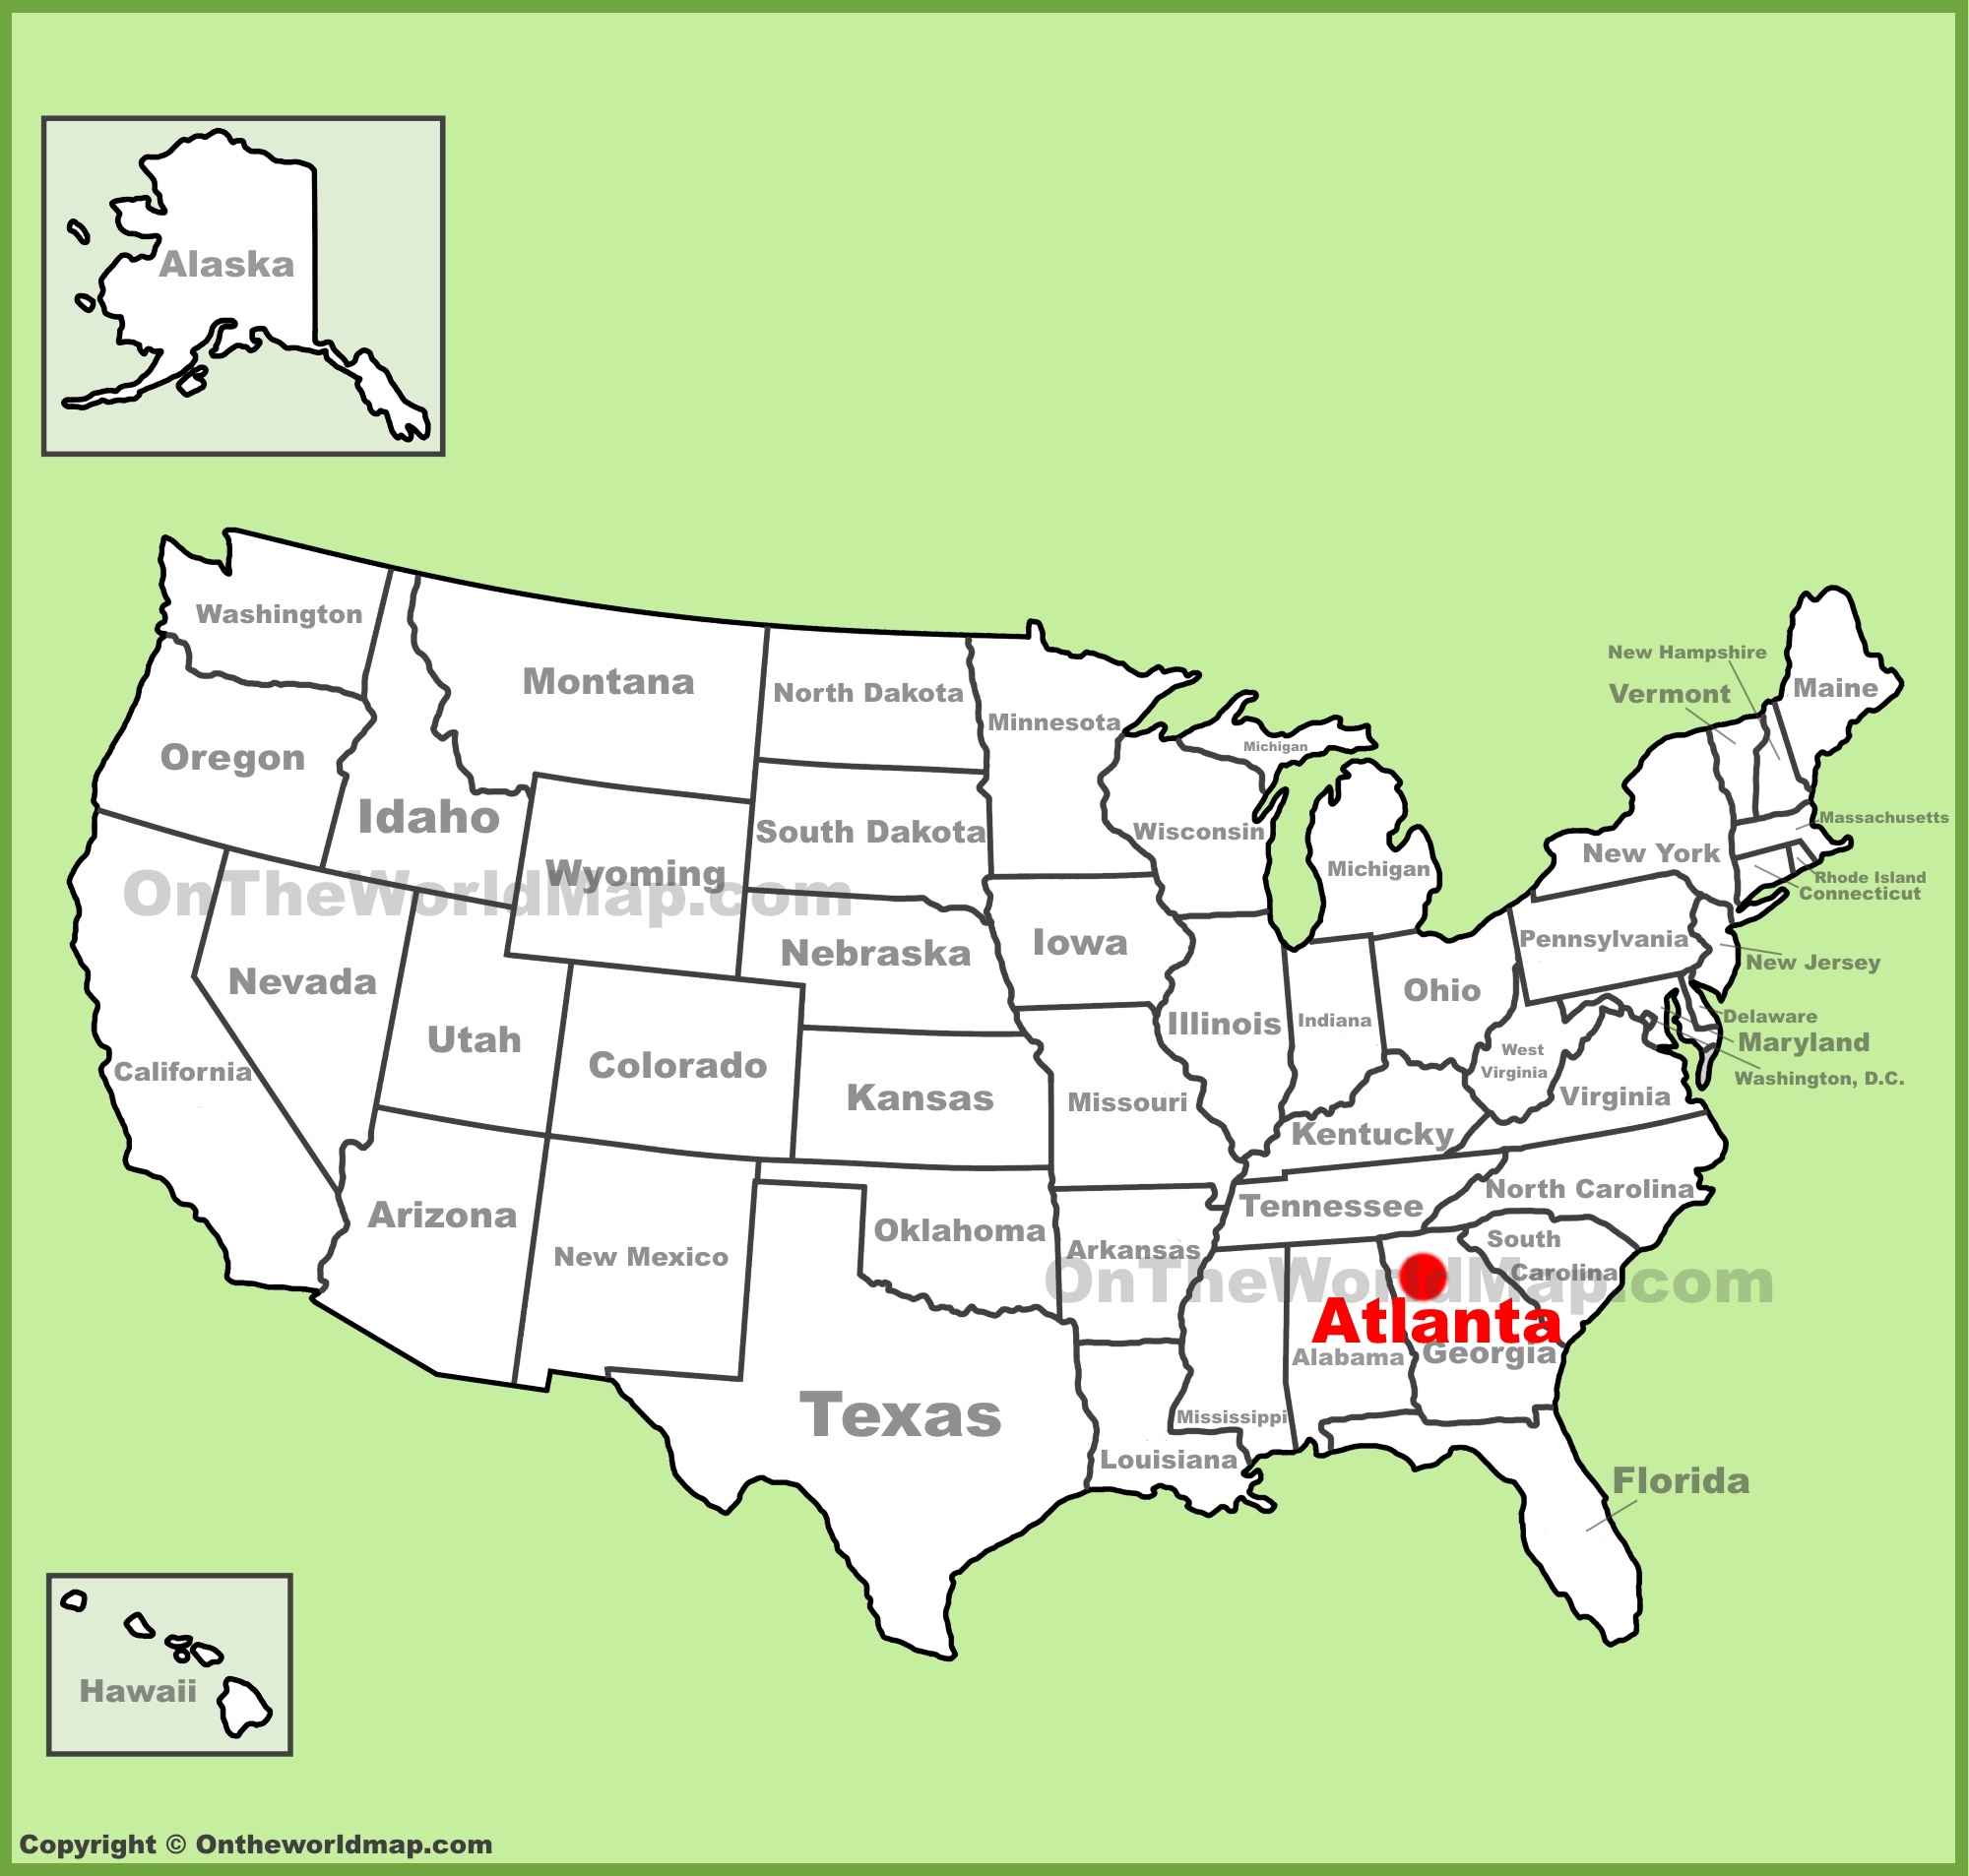 Atlanta Location On The U S Map